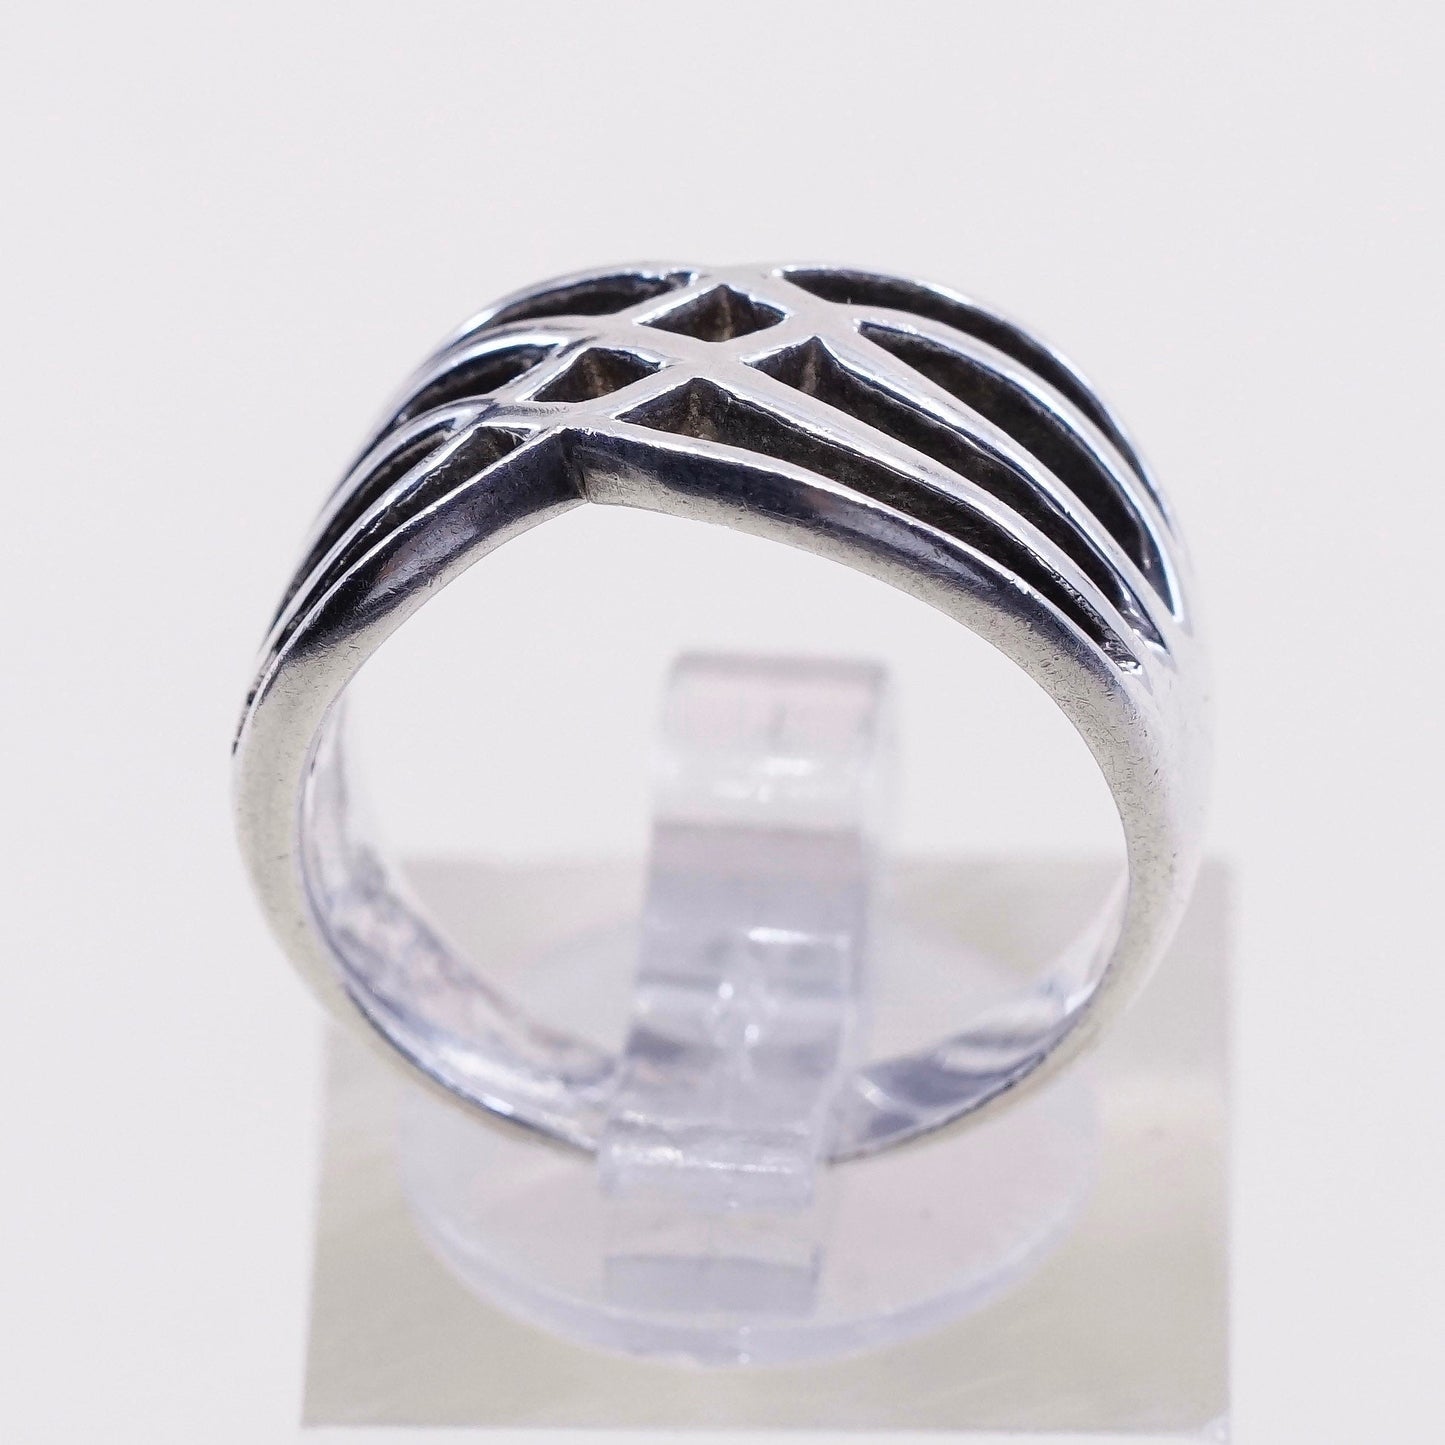 sz 7, vtg sterling silver handmade entwined ring, 925 band minimalist modernist